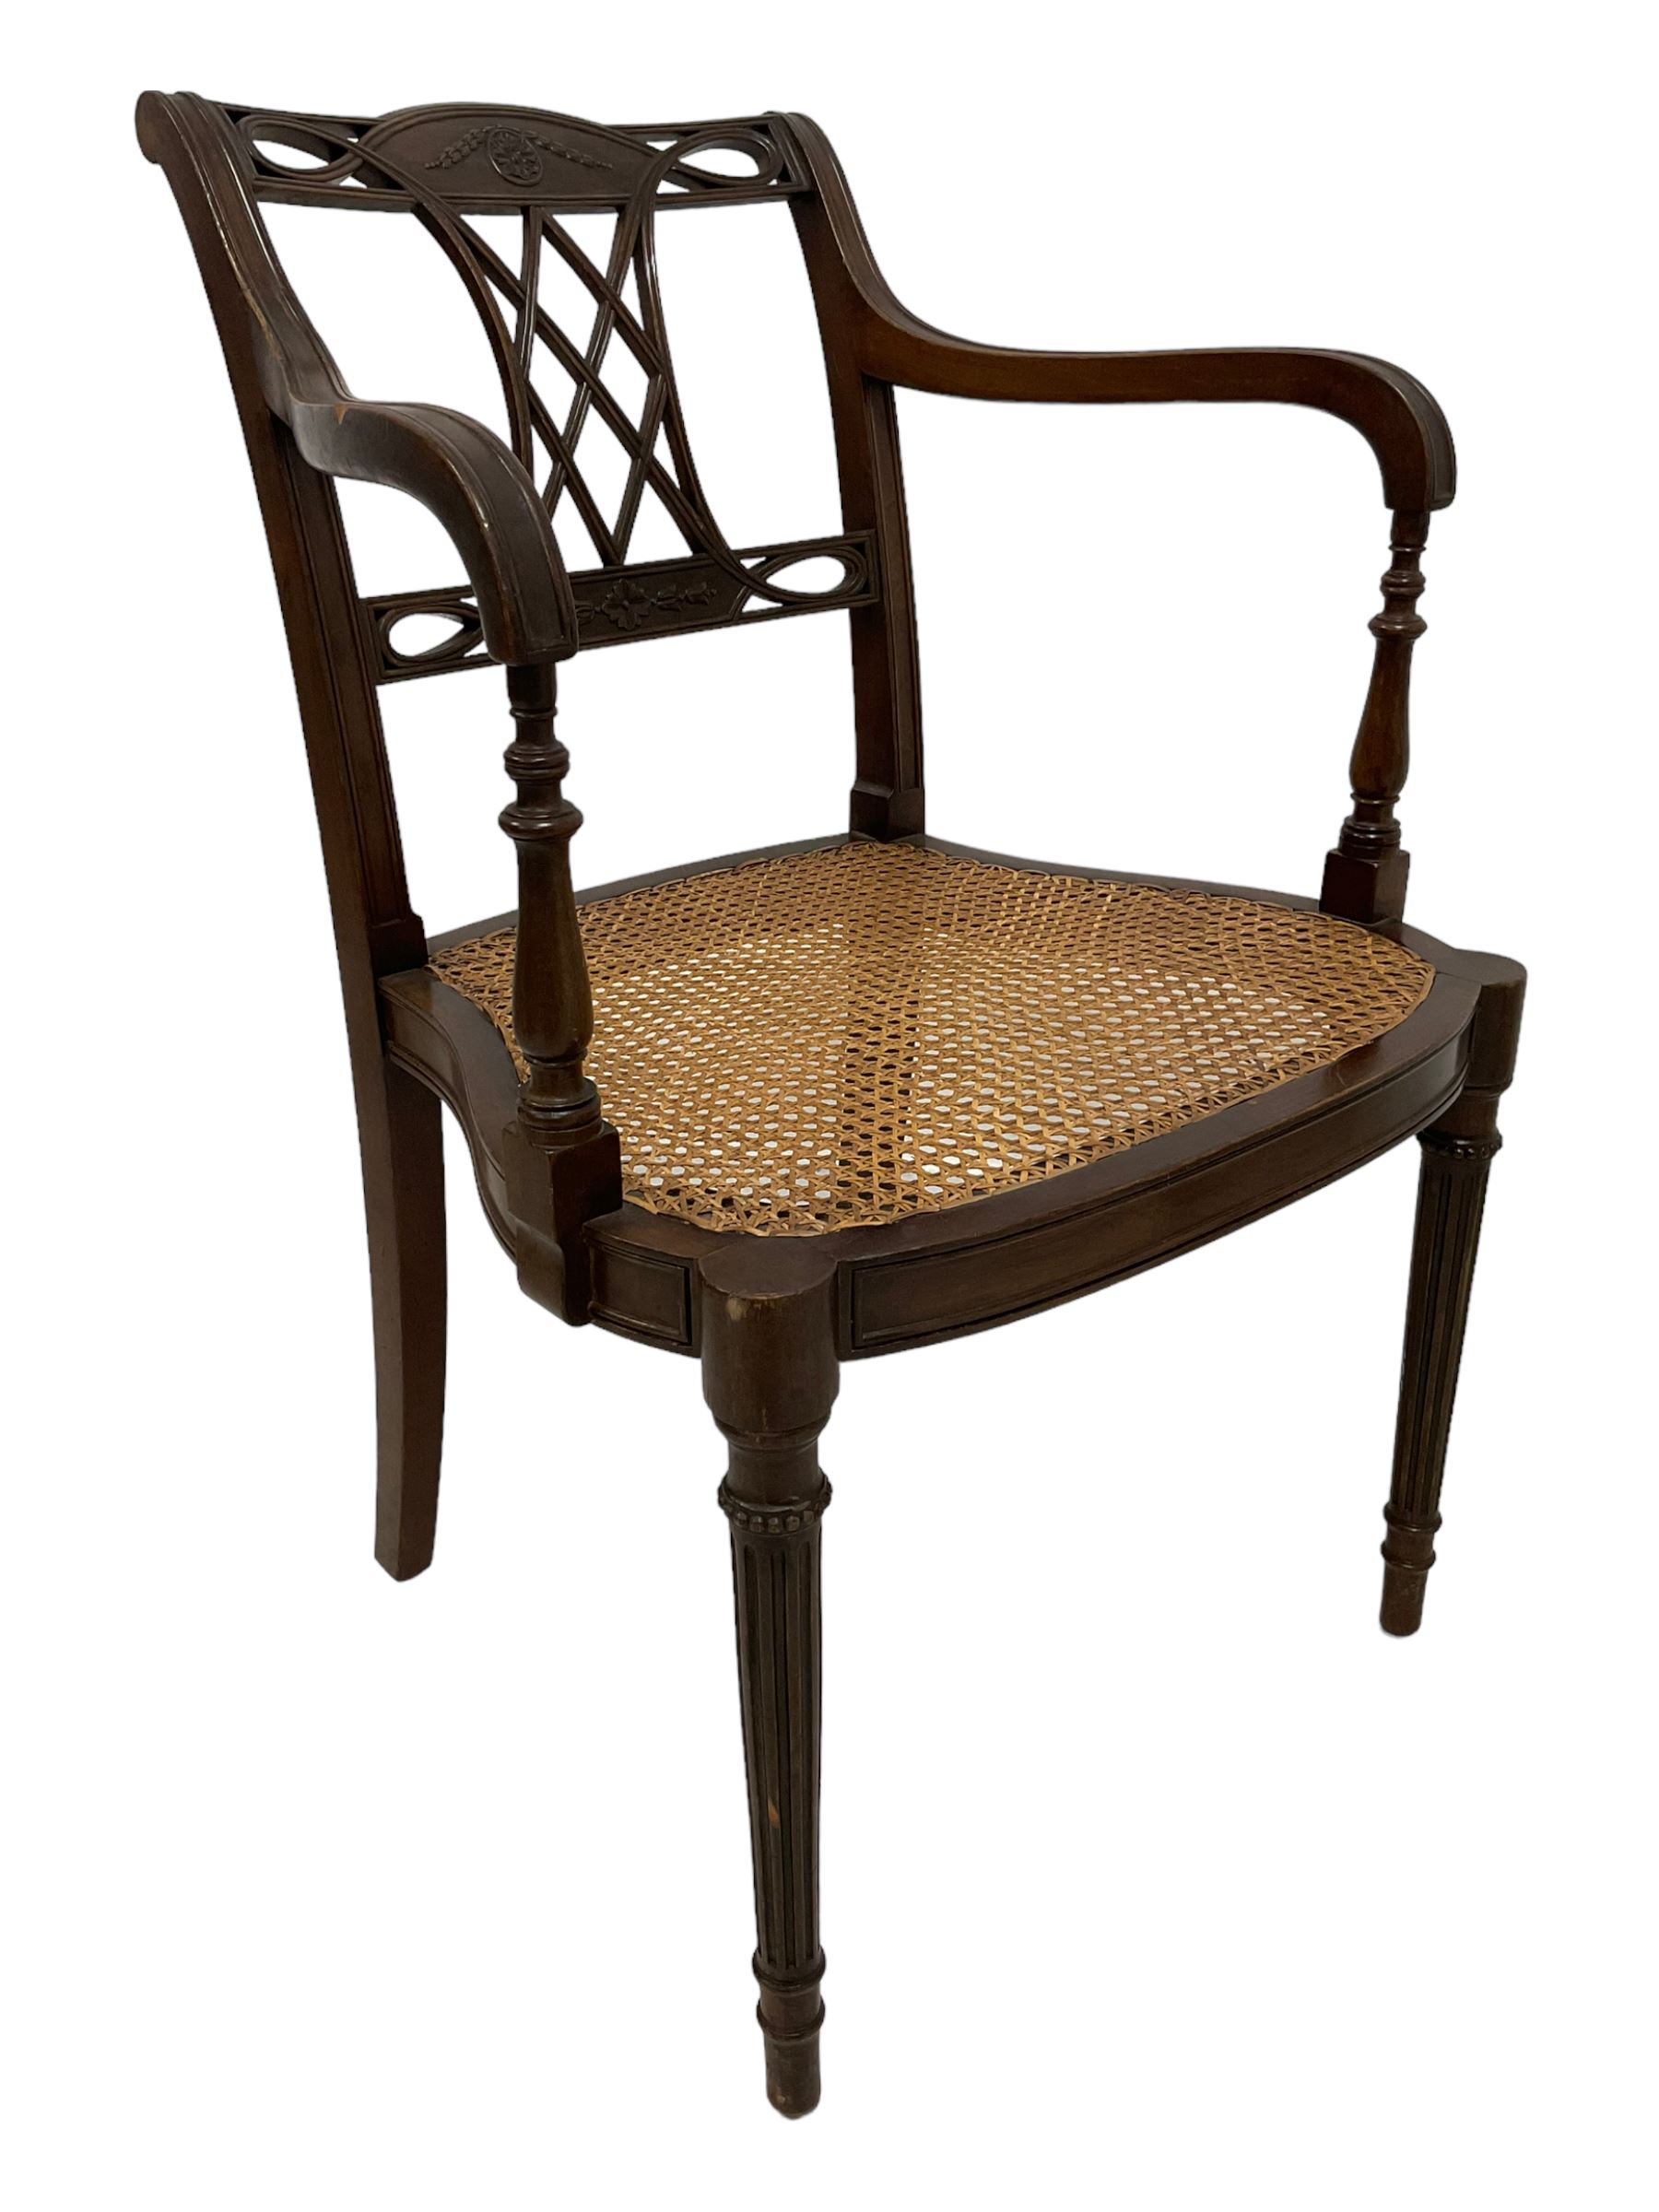 Pair Hepplewhite design open elbow chairs - Image 2 of 6